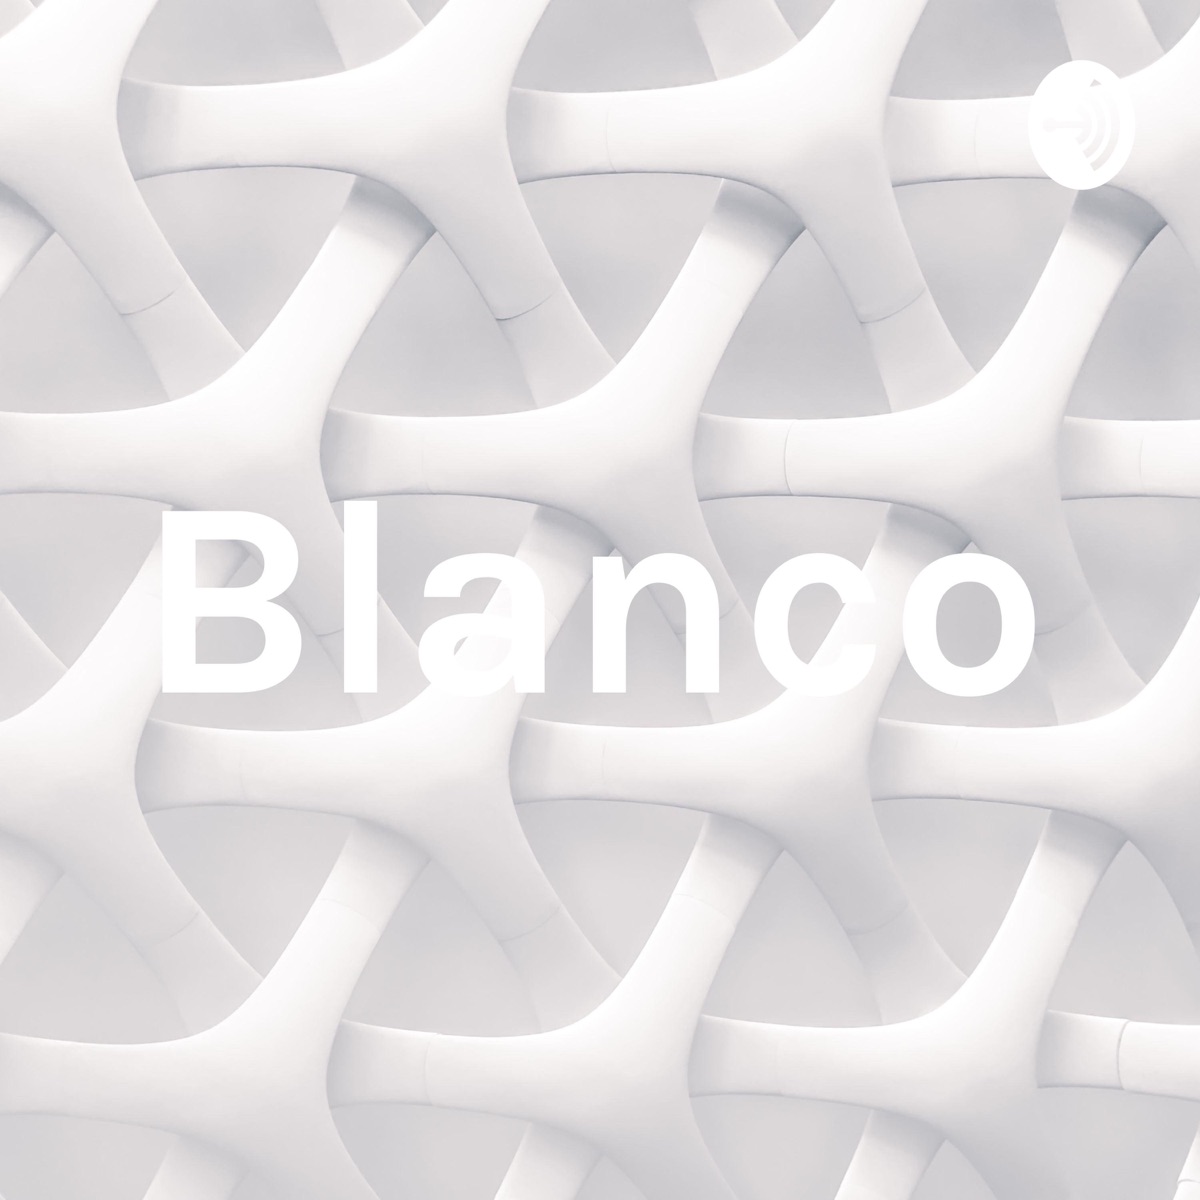 Punto Blanco – Podcast – Podtail